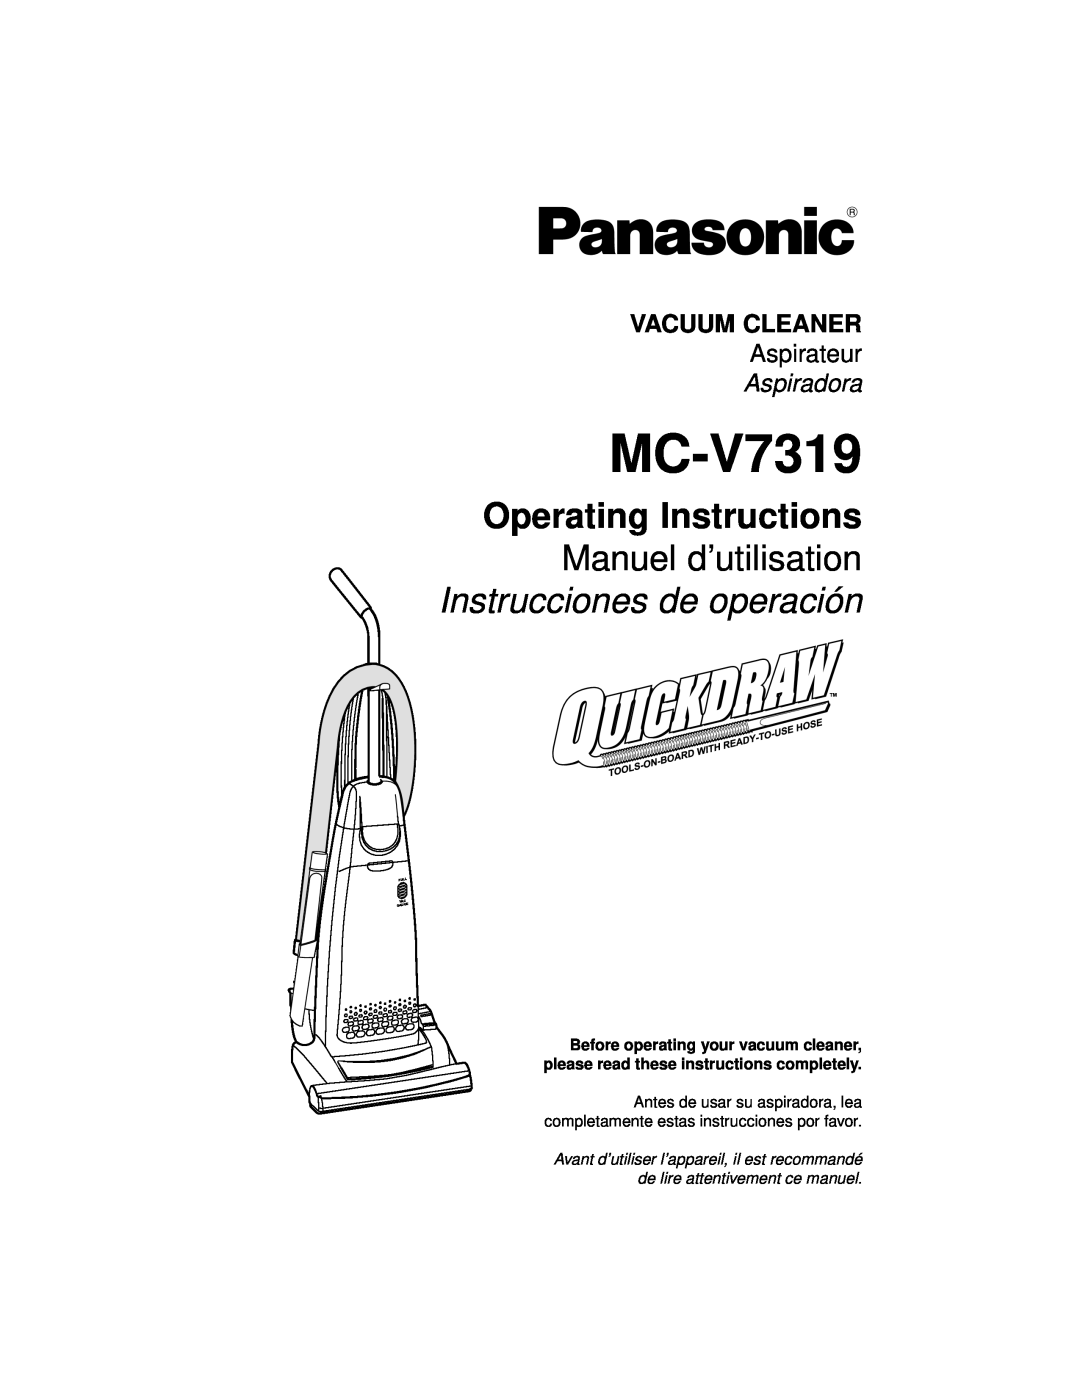 Panasonic MC-V7319 manuel dutilisation Vacuum Cleaner, Aspirateur, Aspiradora, Full Vac Gauge 